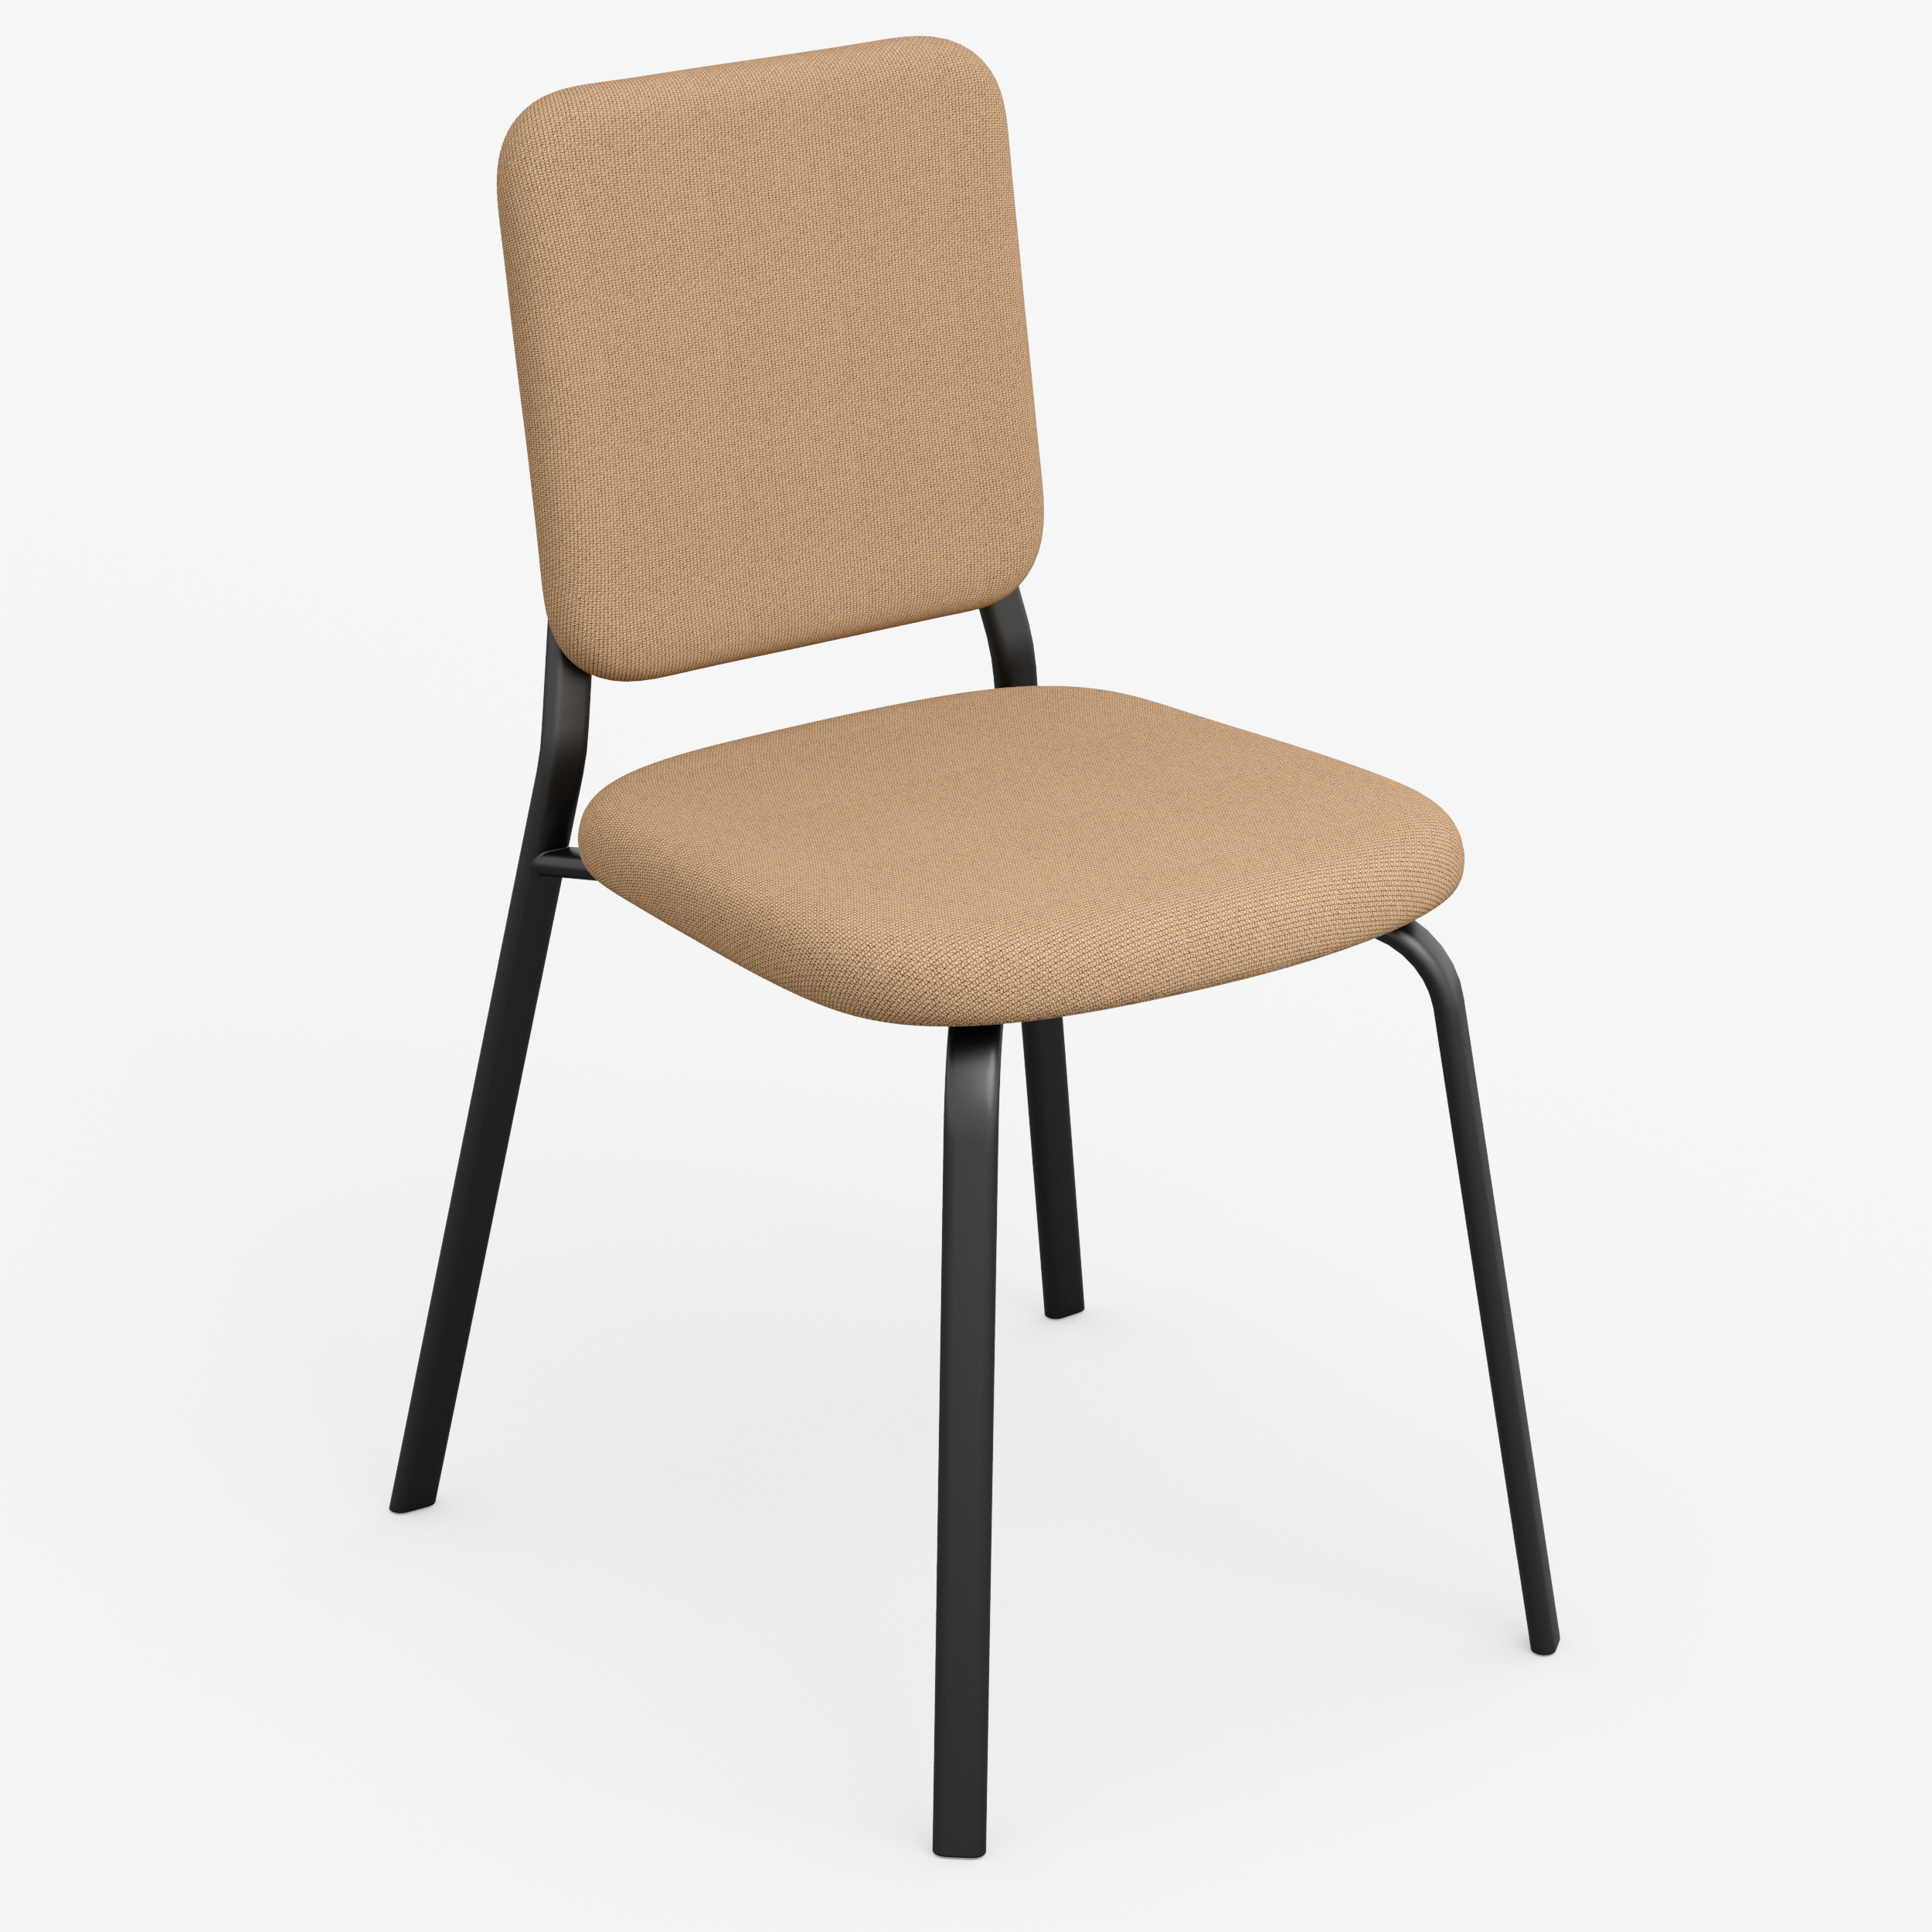 Form - Chair (Square, Persian Orange)